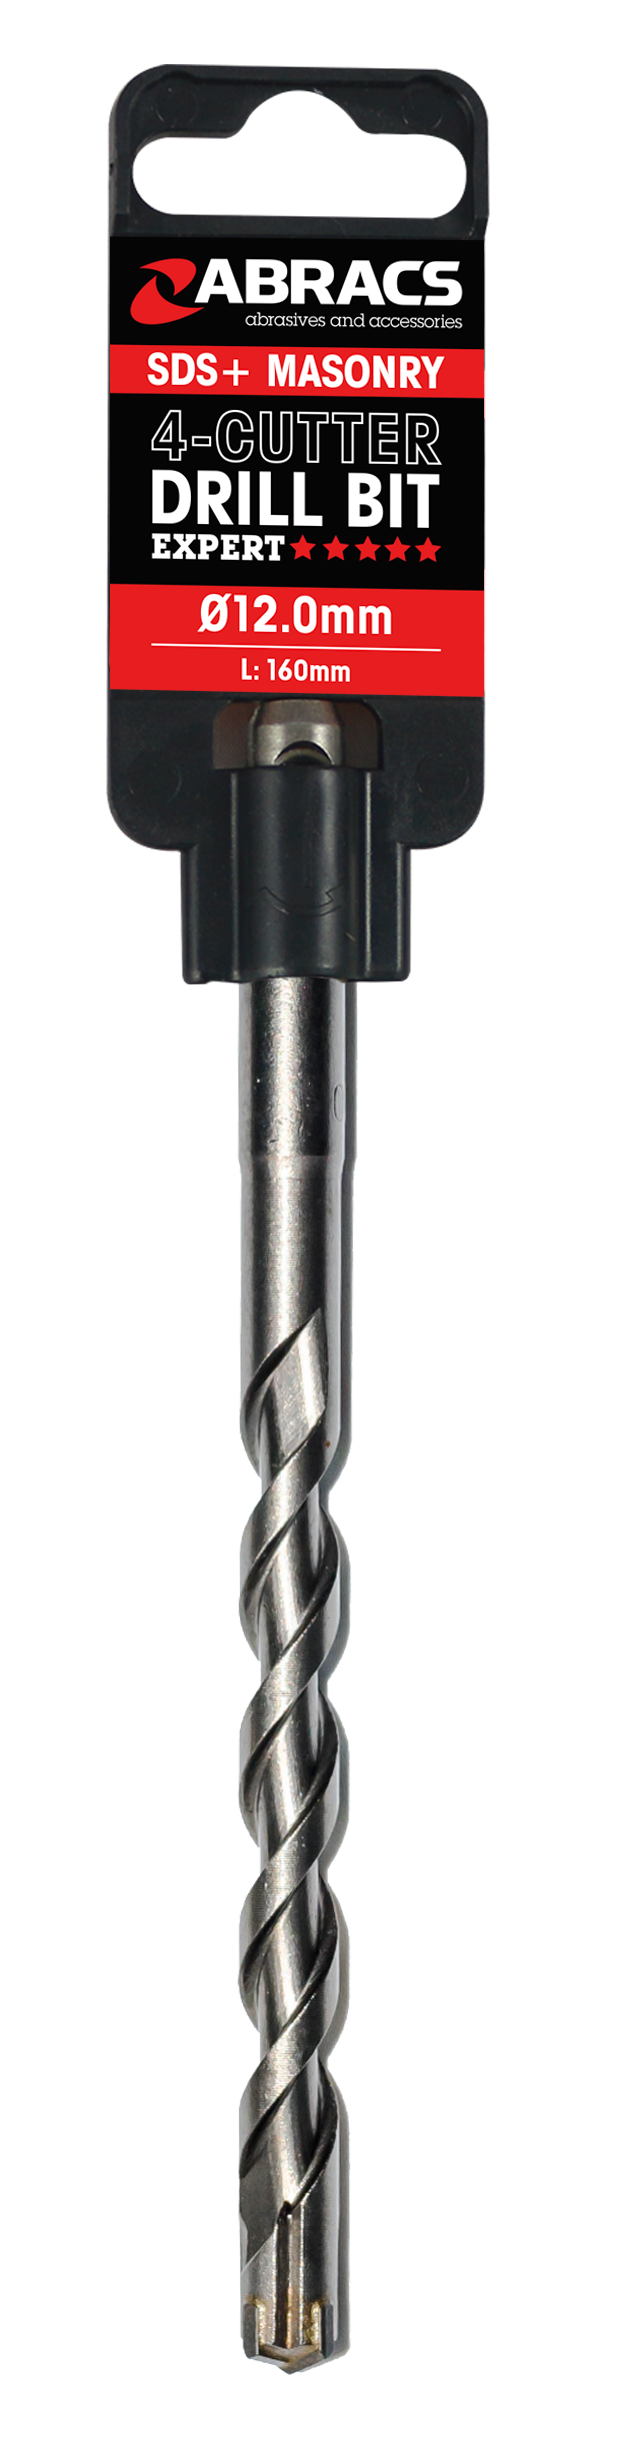 DBCX140210 14.0mm x 210mm SDS+ Masonry Drill Bit - 4 Cutter